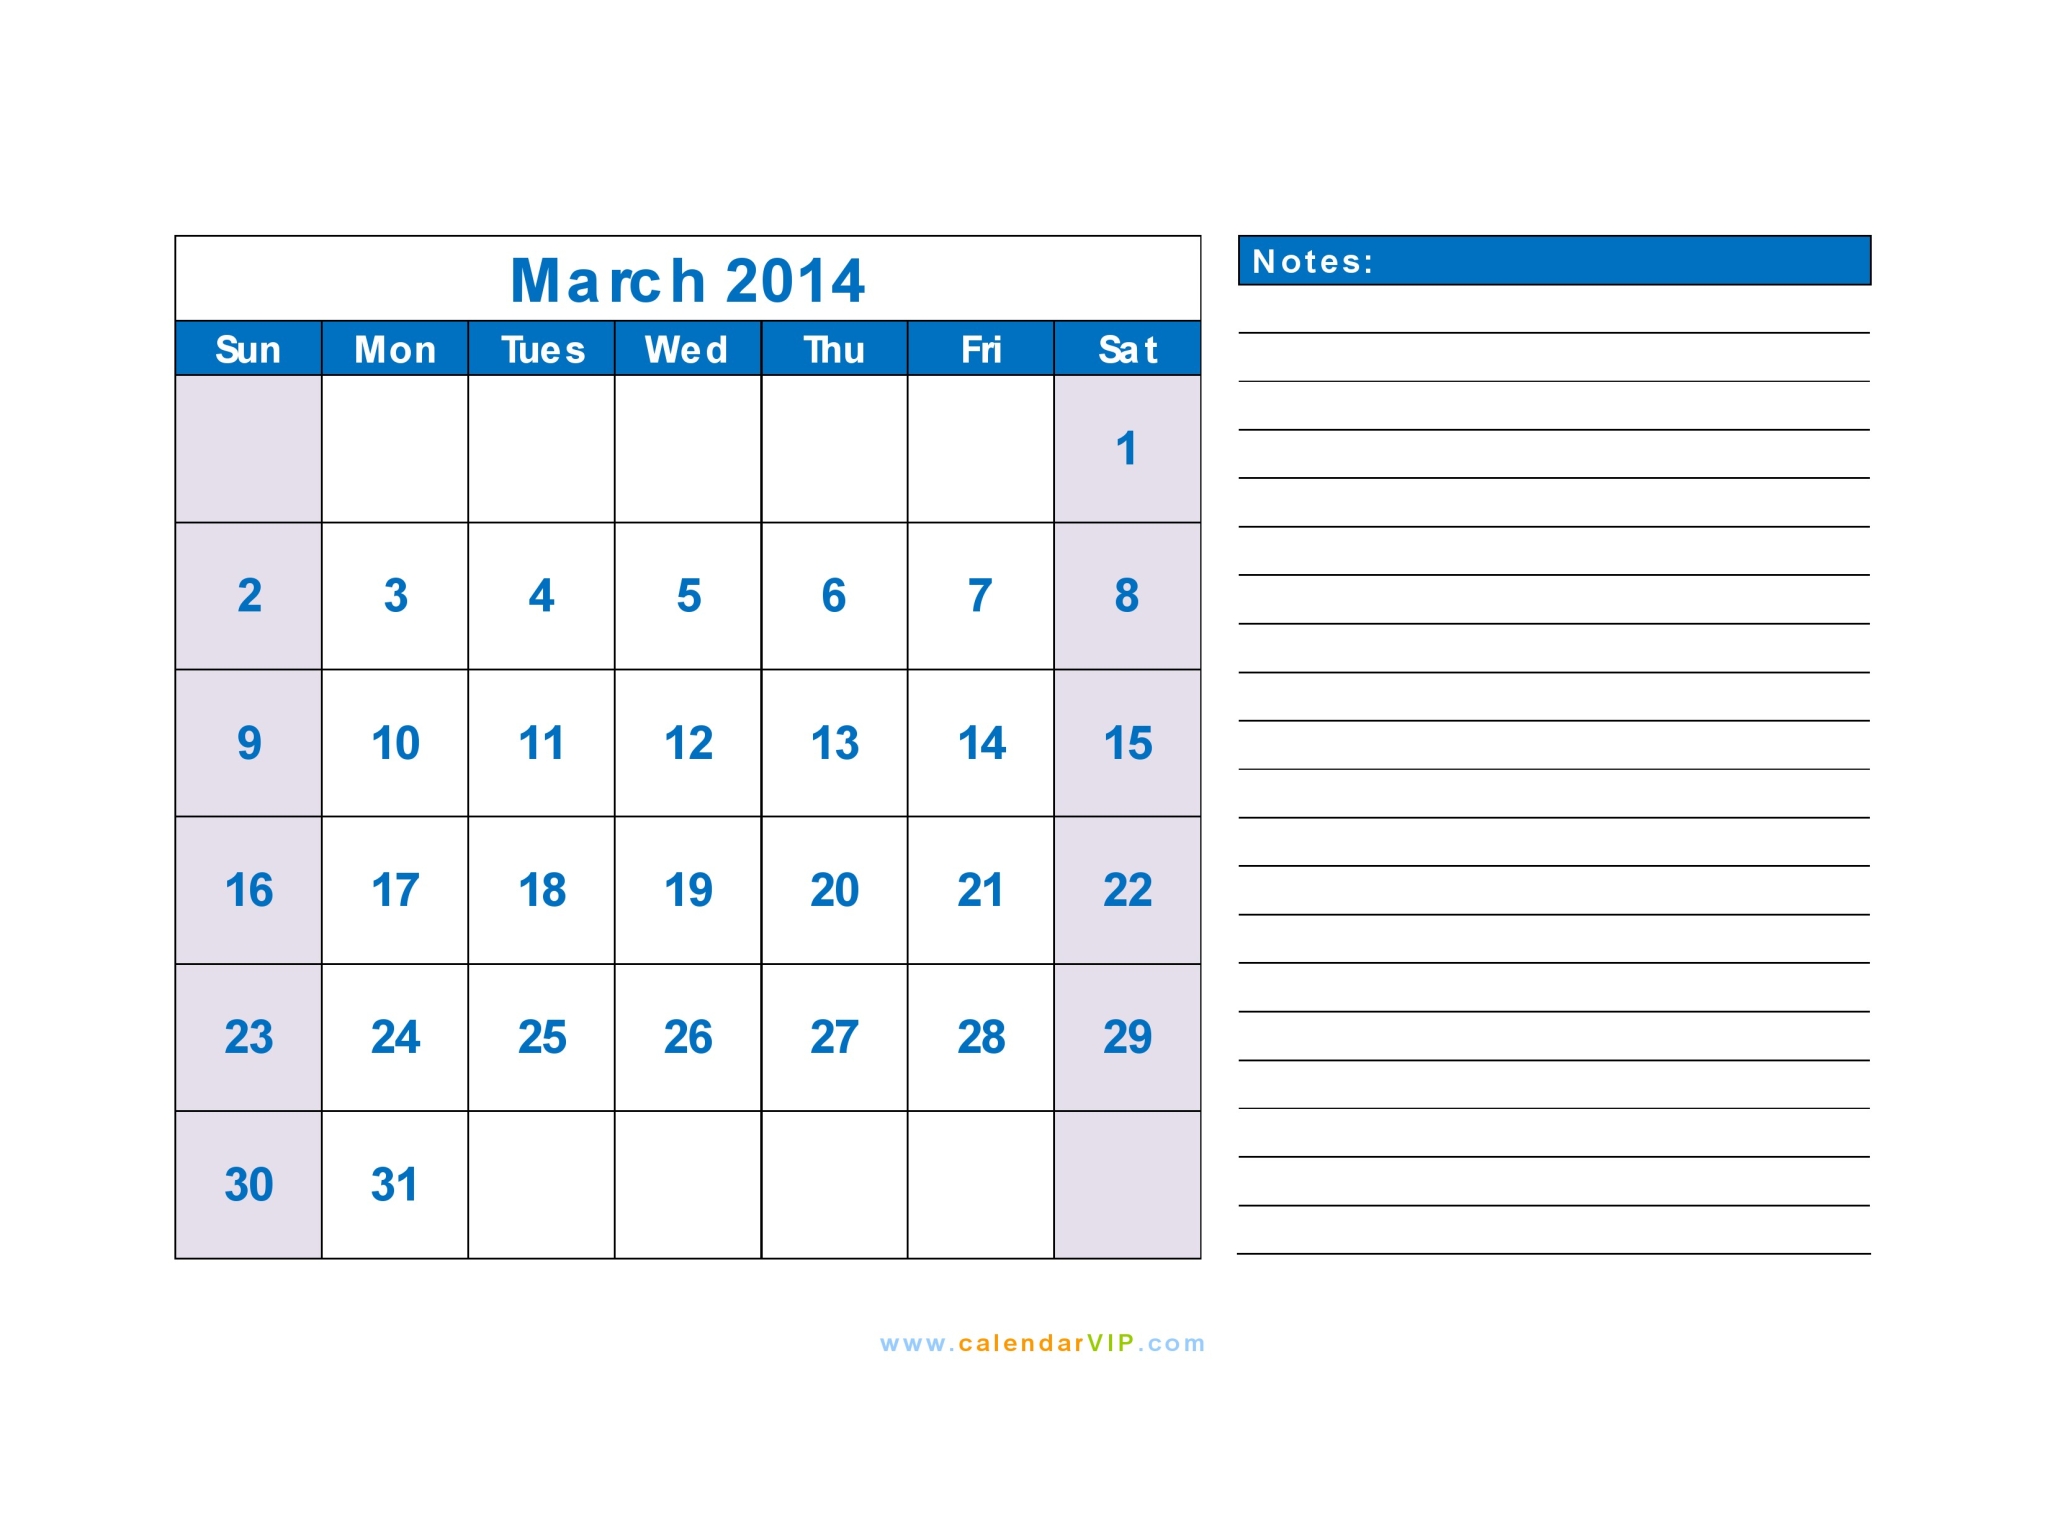 March 2014 Calendar Blank Printable Calendar Template In Pdf Word Excel